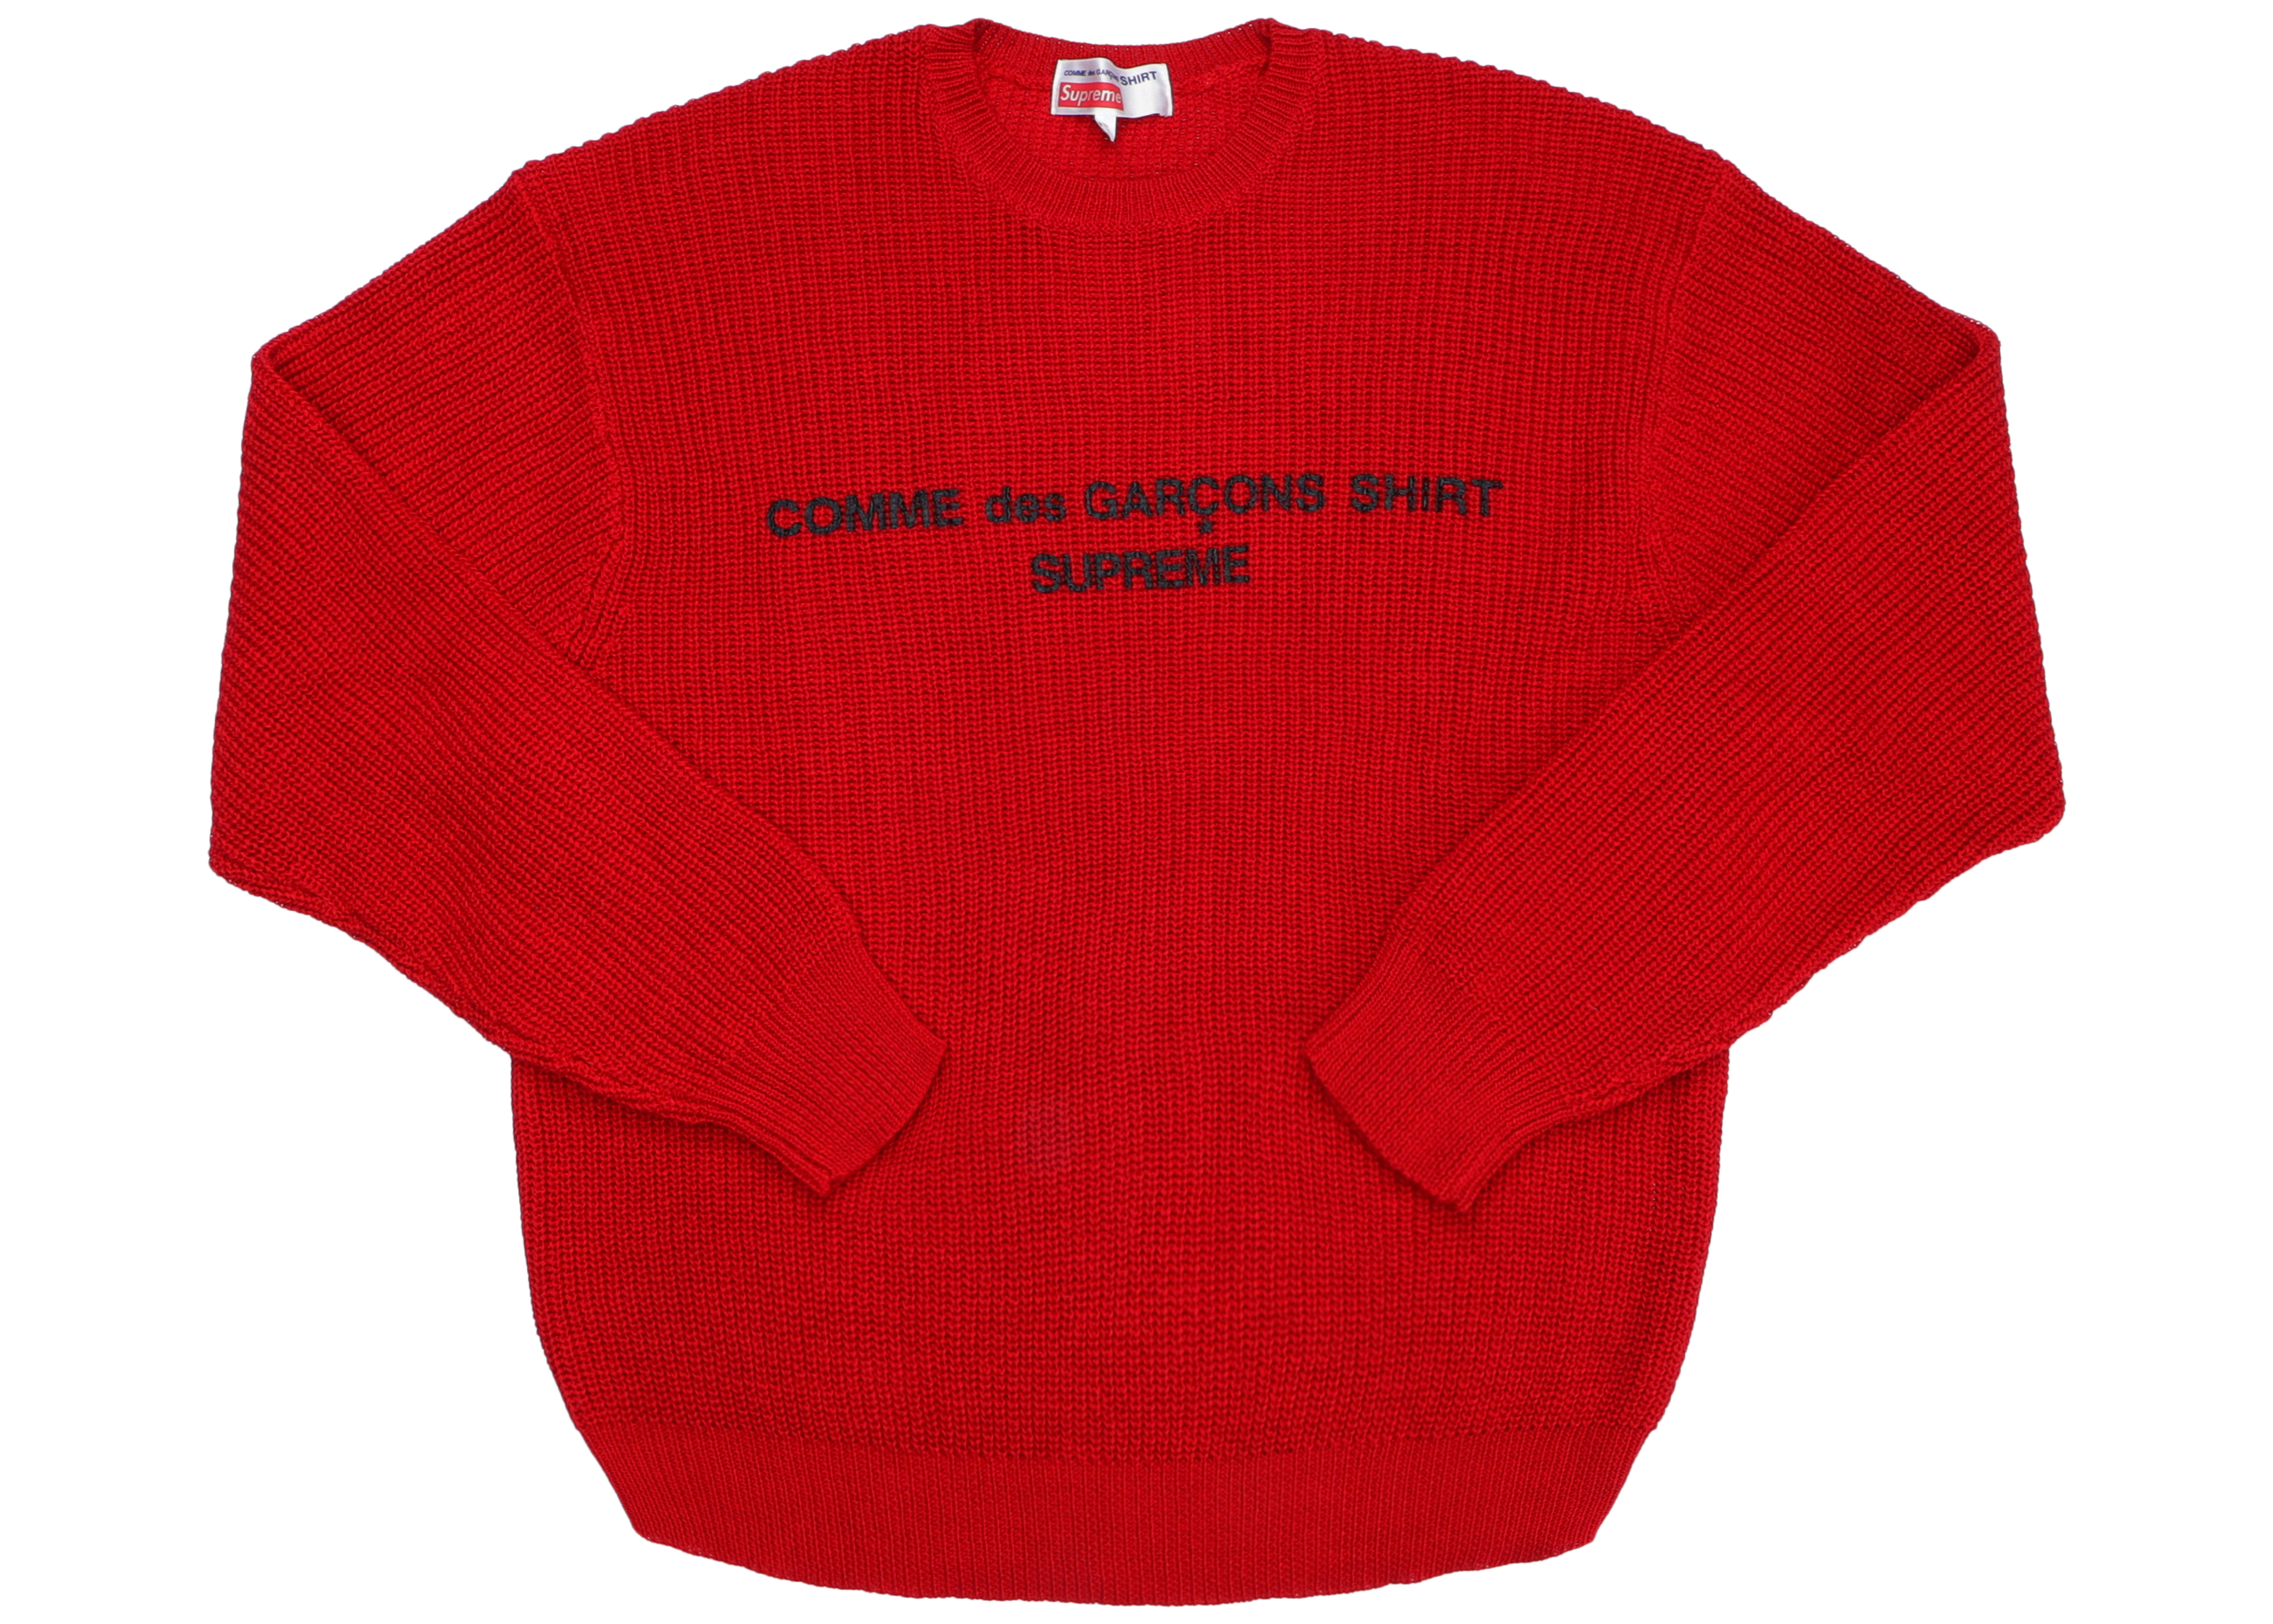 Supreme Comme des Garcons SHIRT Sweater Red Men's - FW18